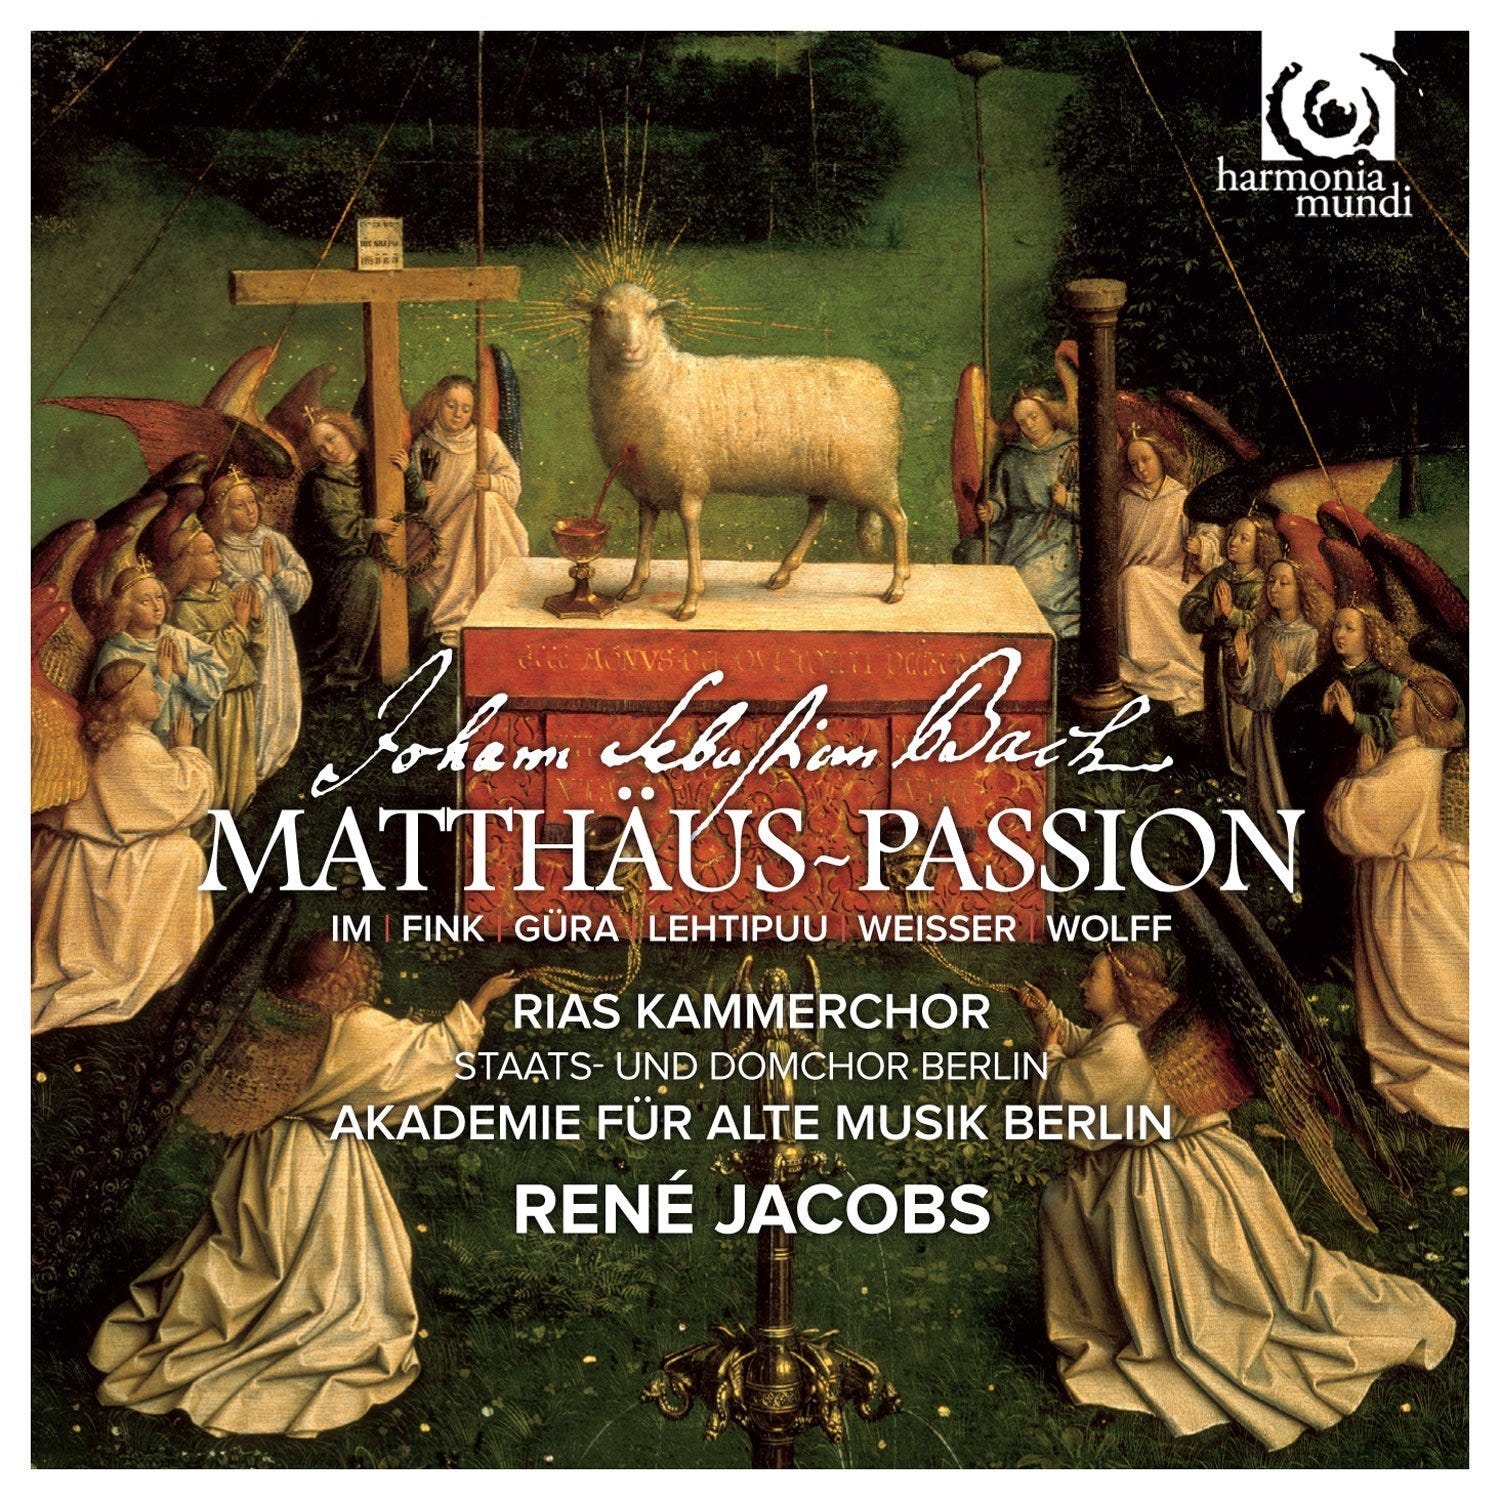 CD Review: Bach's St. Matthew Passion, performed by René Jacobs et al.